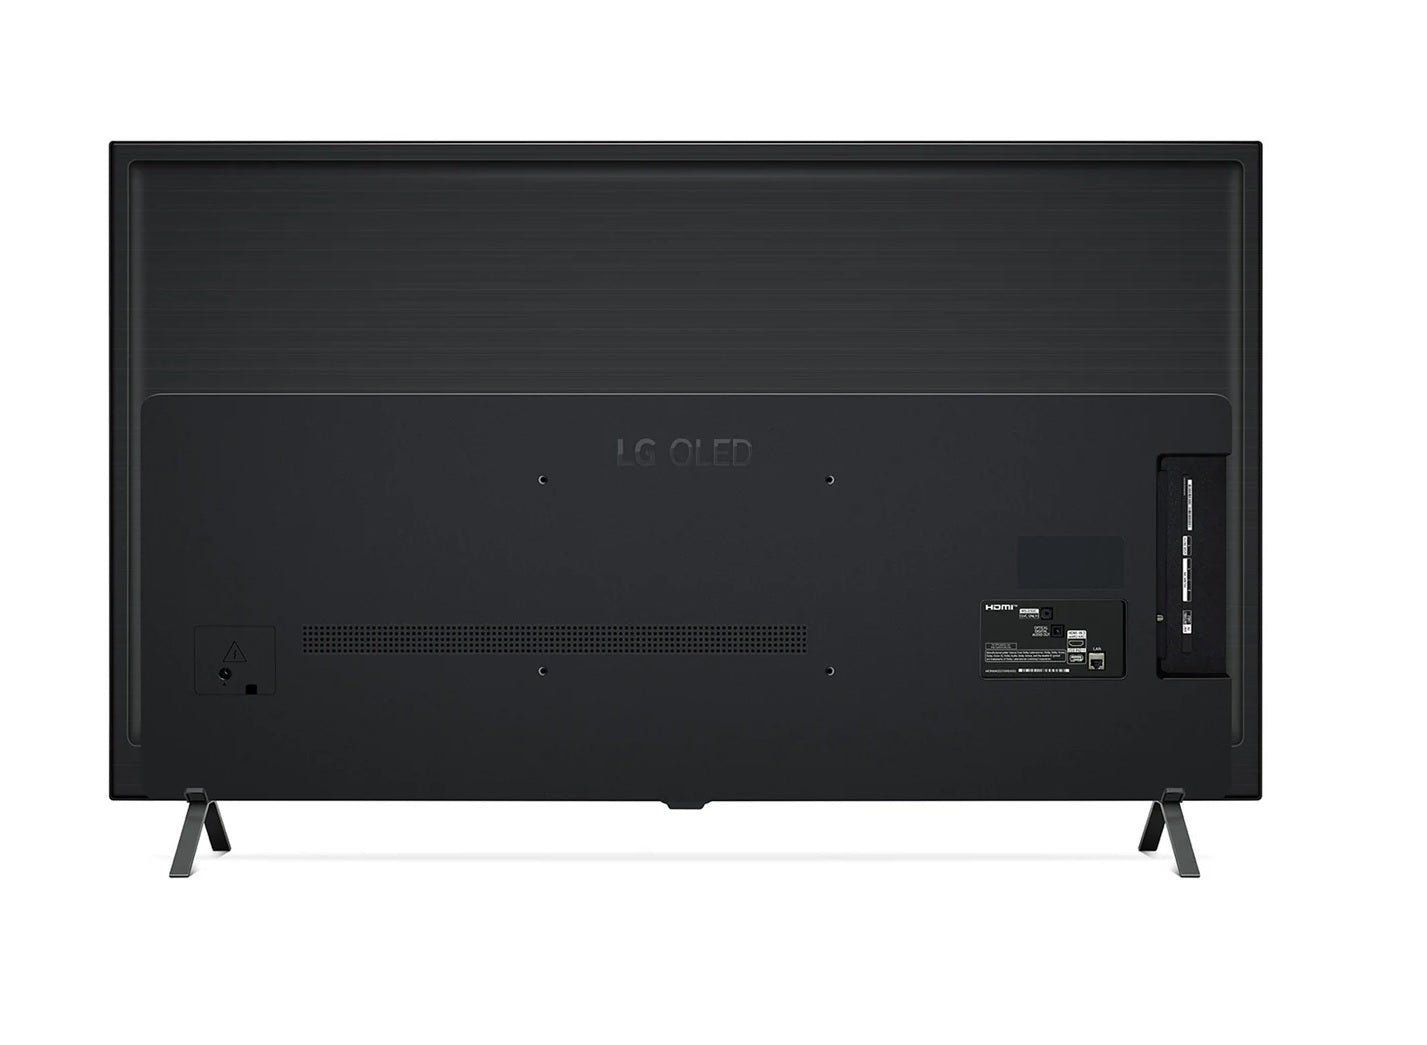 LG 樂金 A3 4K OLED 智能電視 - Fever Electrics 電器熱網購平台